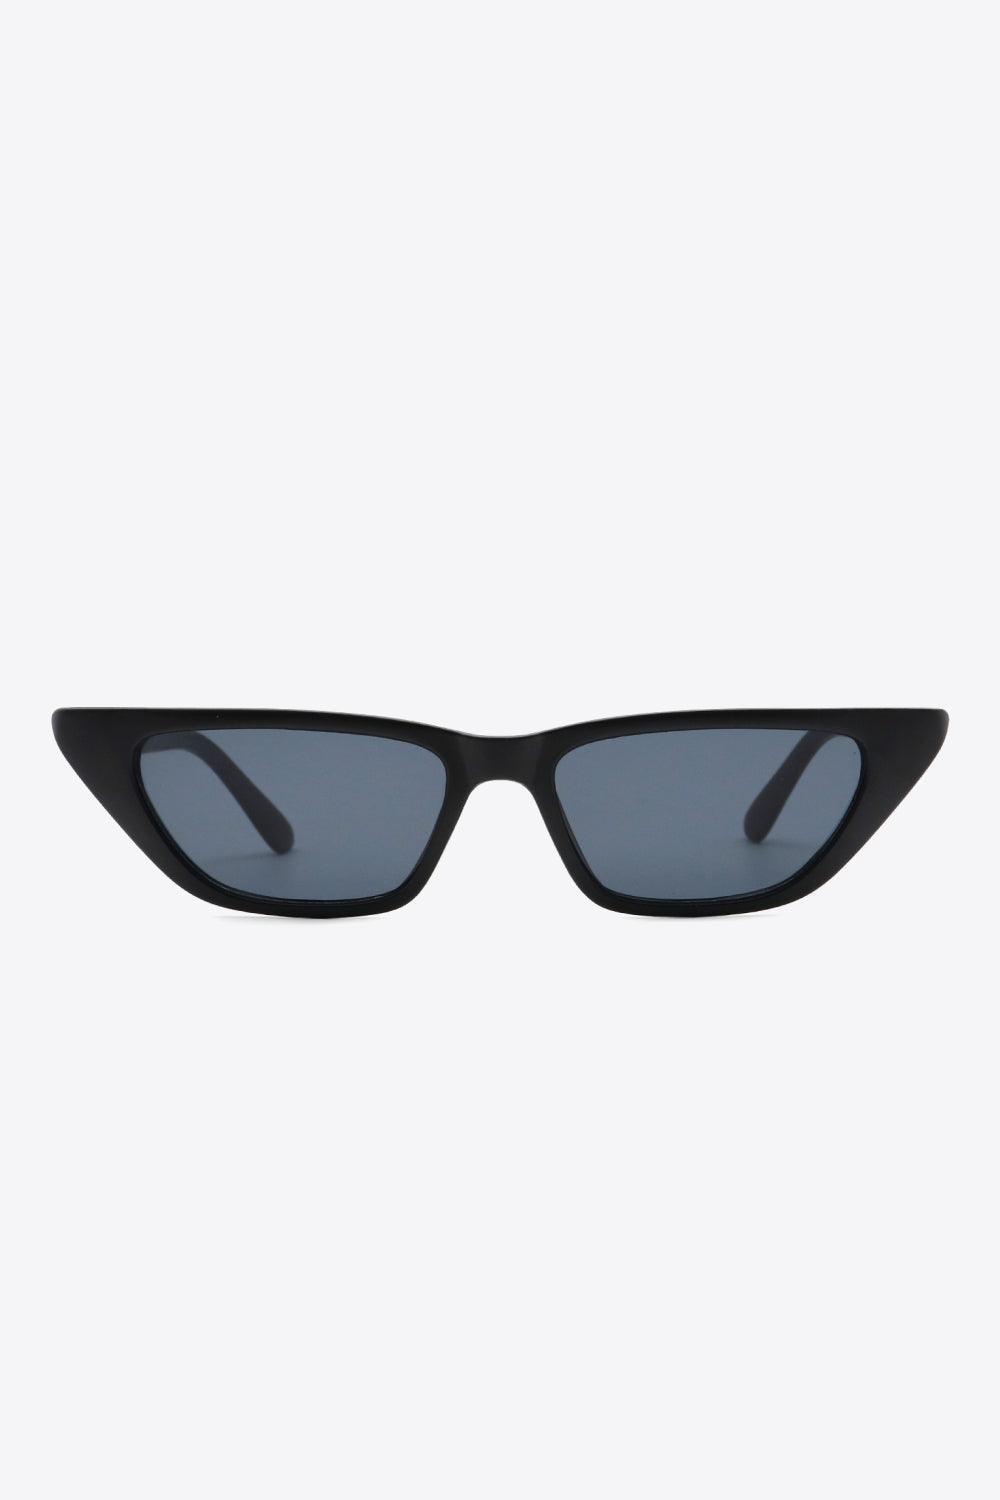 Look Fantastic Black Cat Eye Polycarbonate Sunglasses - MXSTUDIO.COM